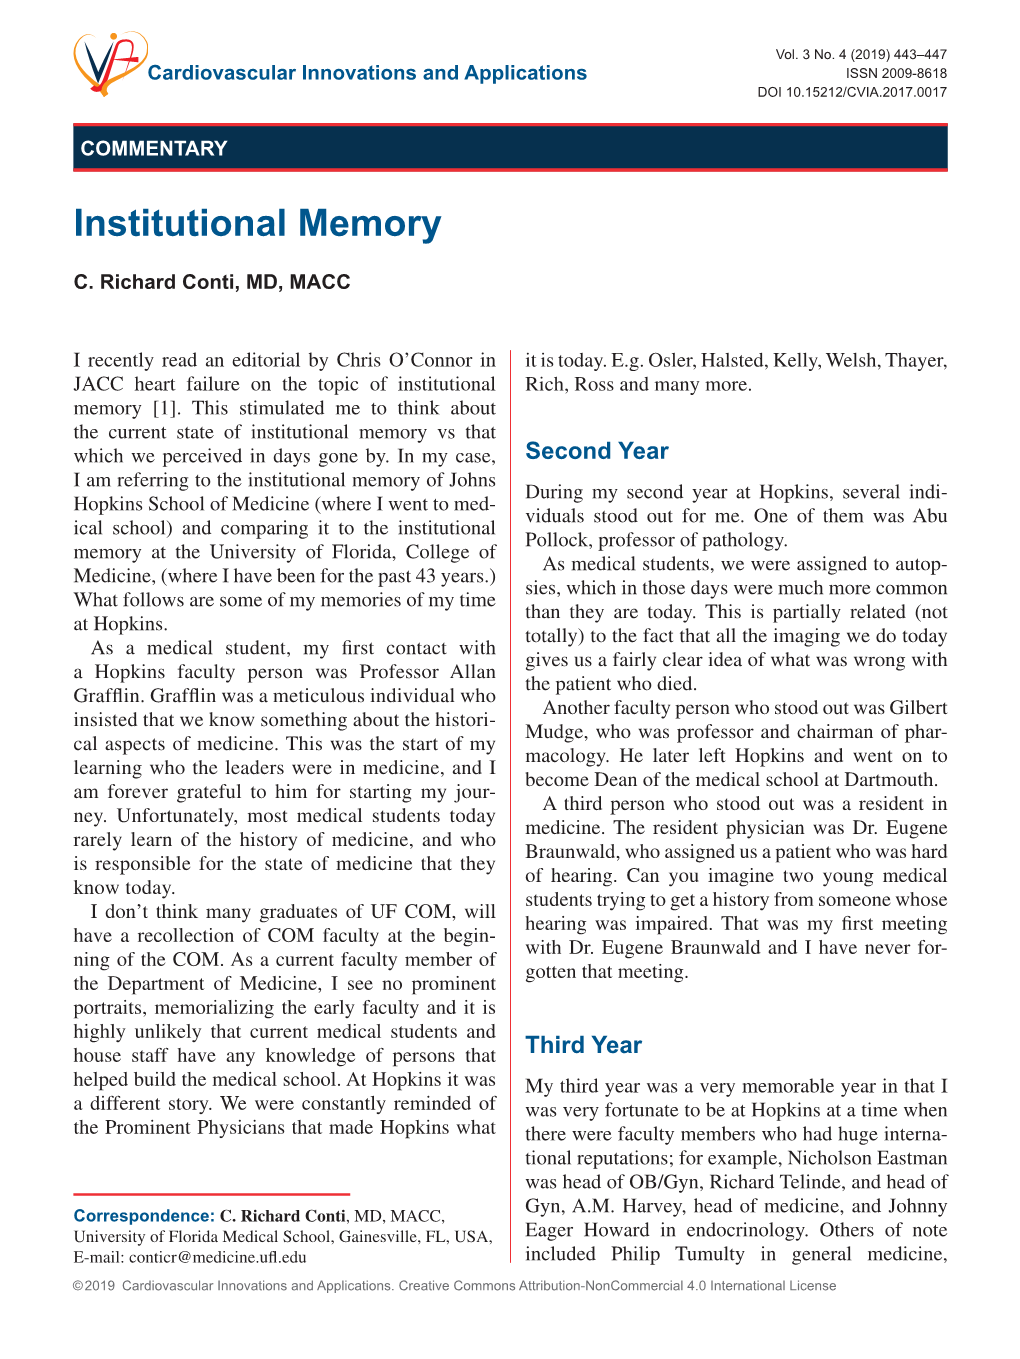 Institutional Memory